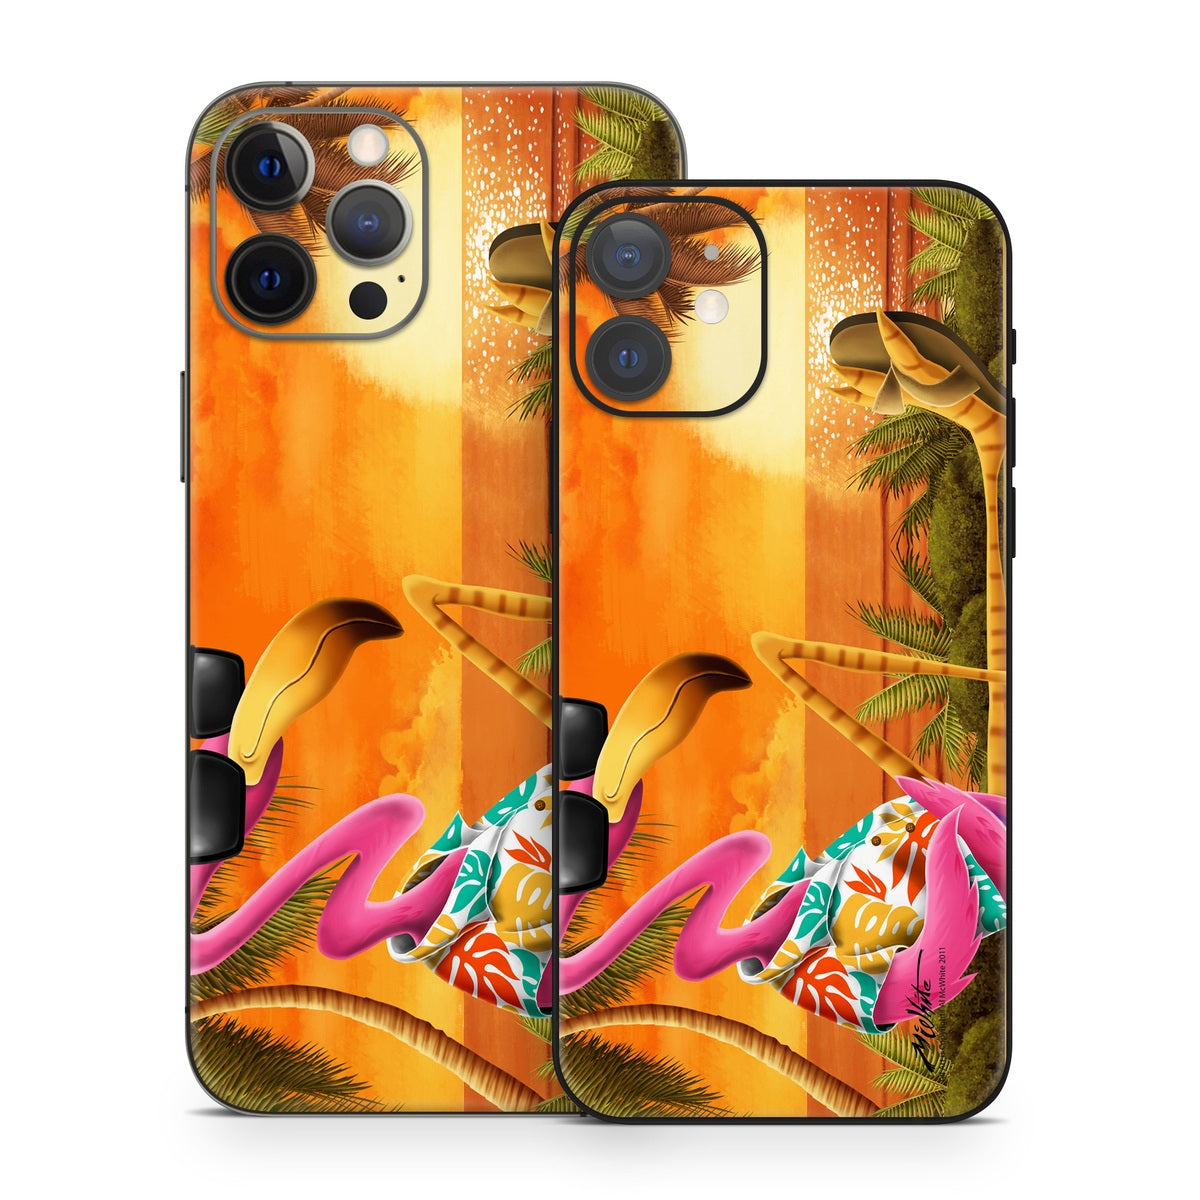 Sunset Flamingo - Apple iPhone 12 Skin